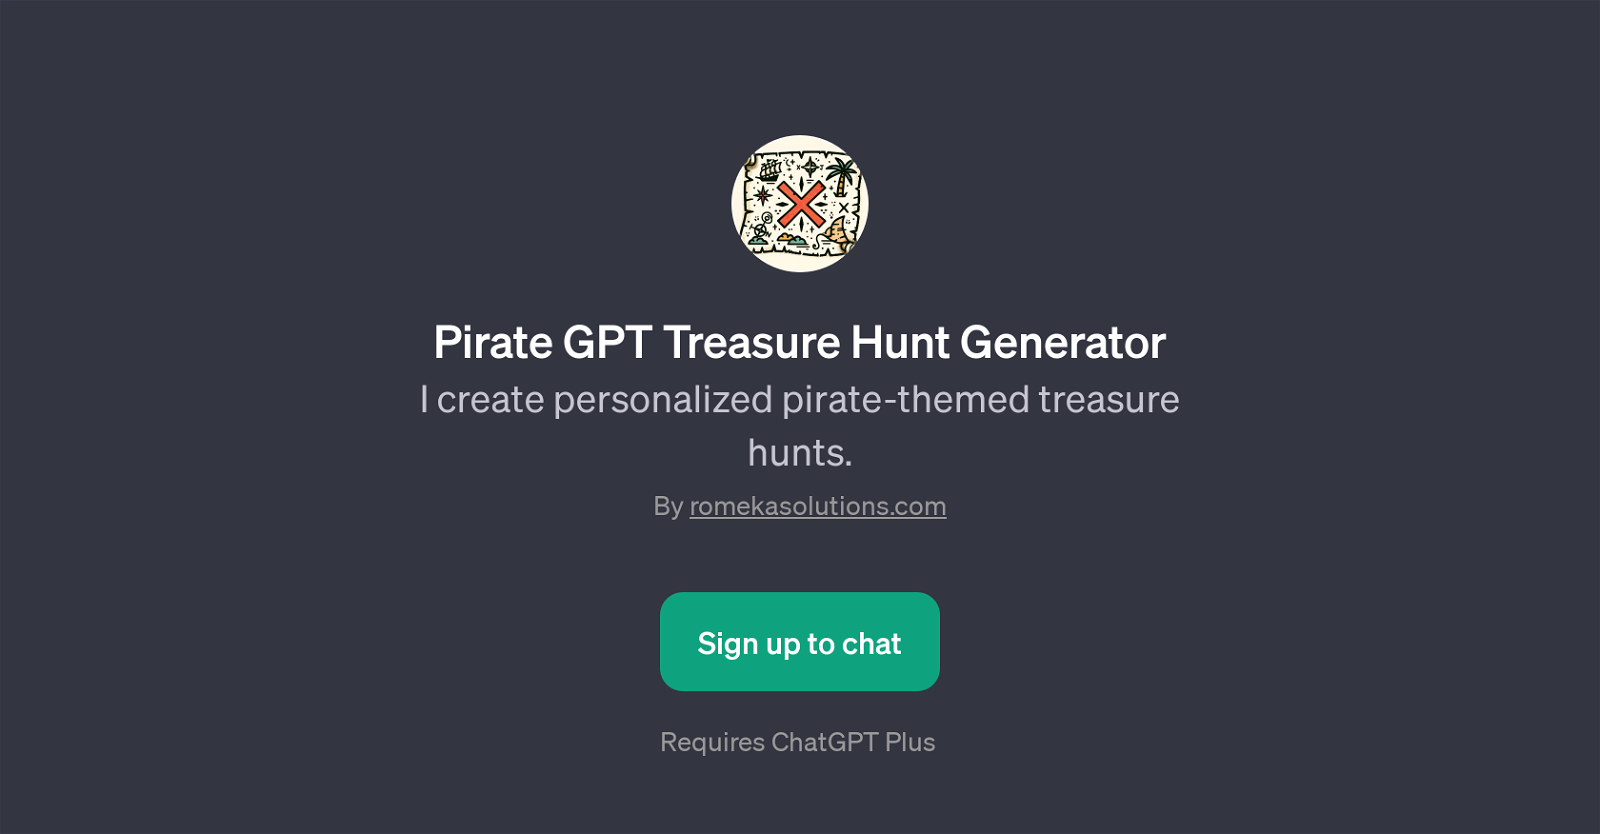 Pirate GPT Treasure Hunt Generator website